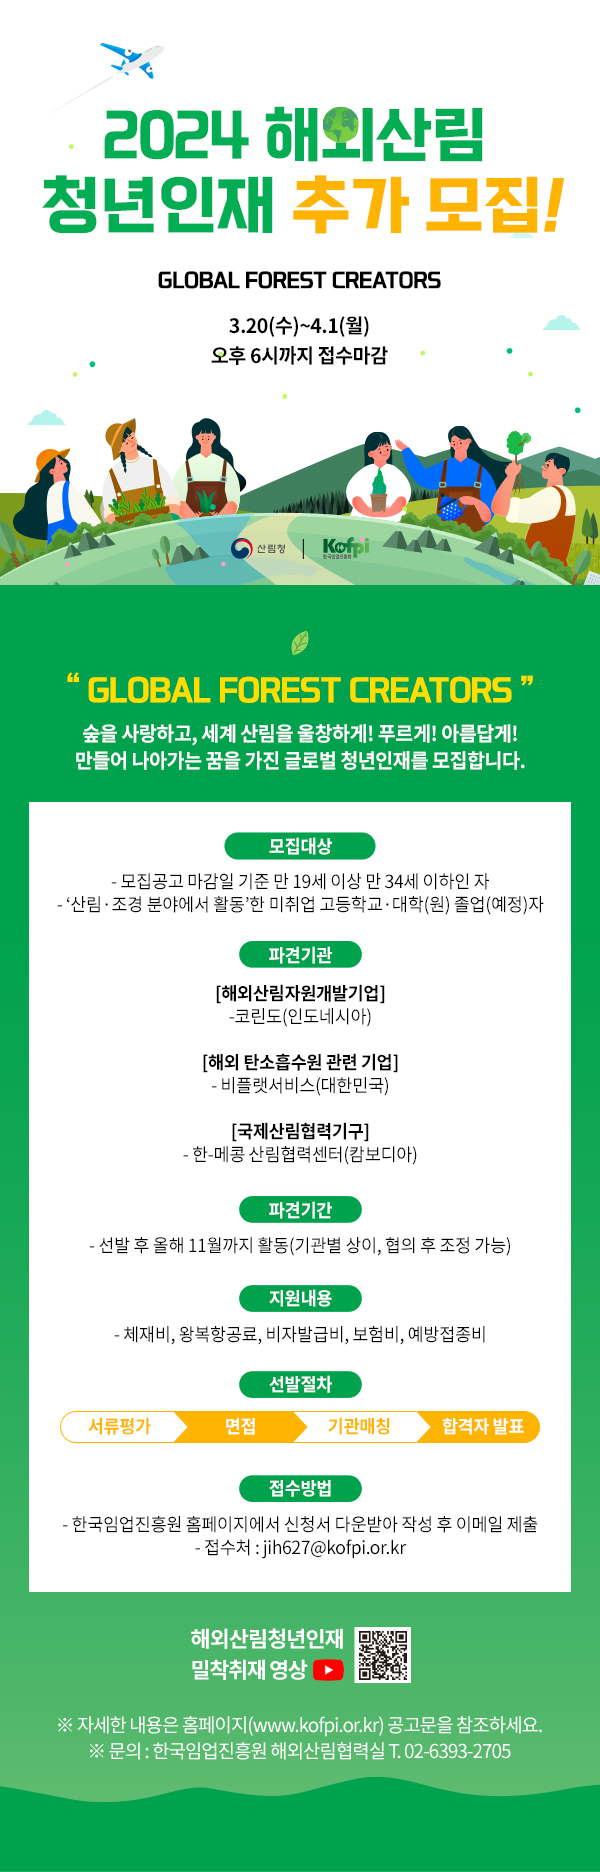 GLOBAL FOREST CREATORS